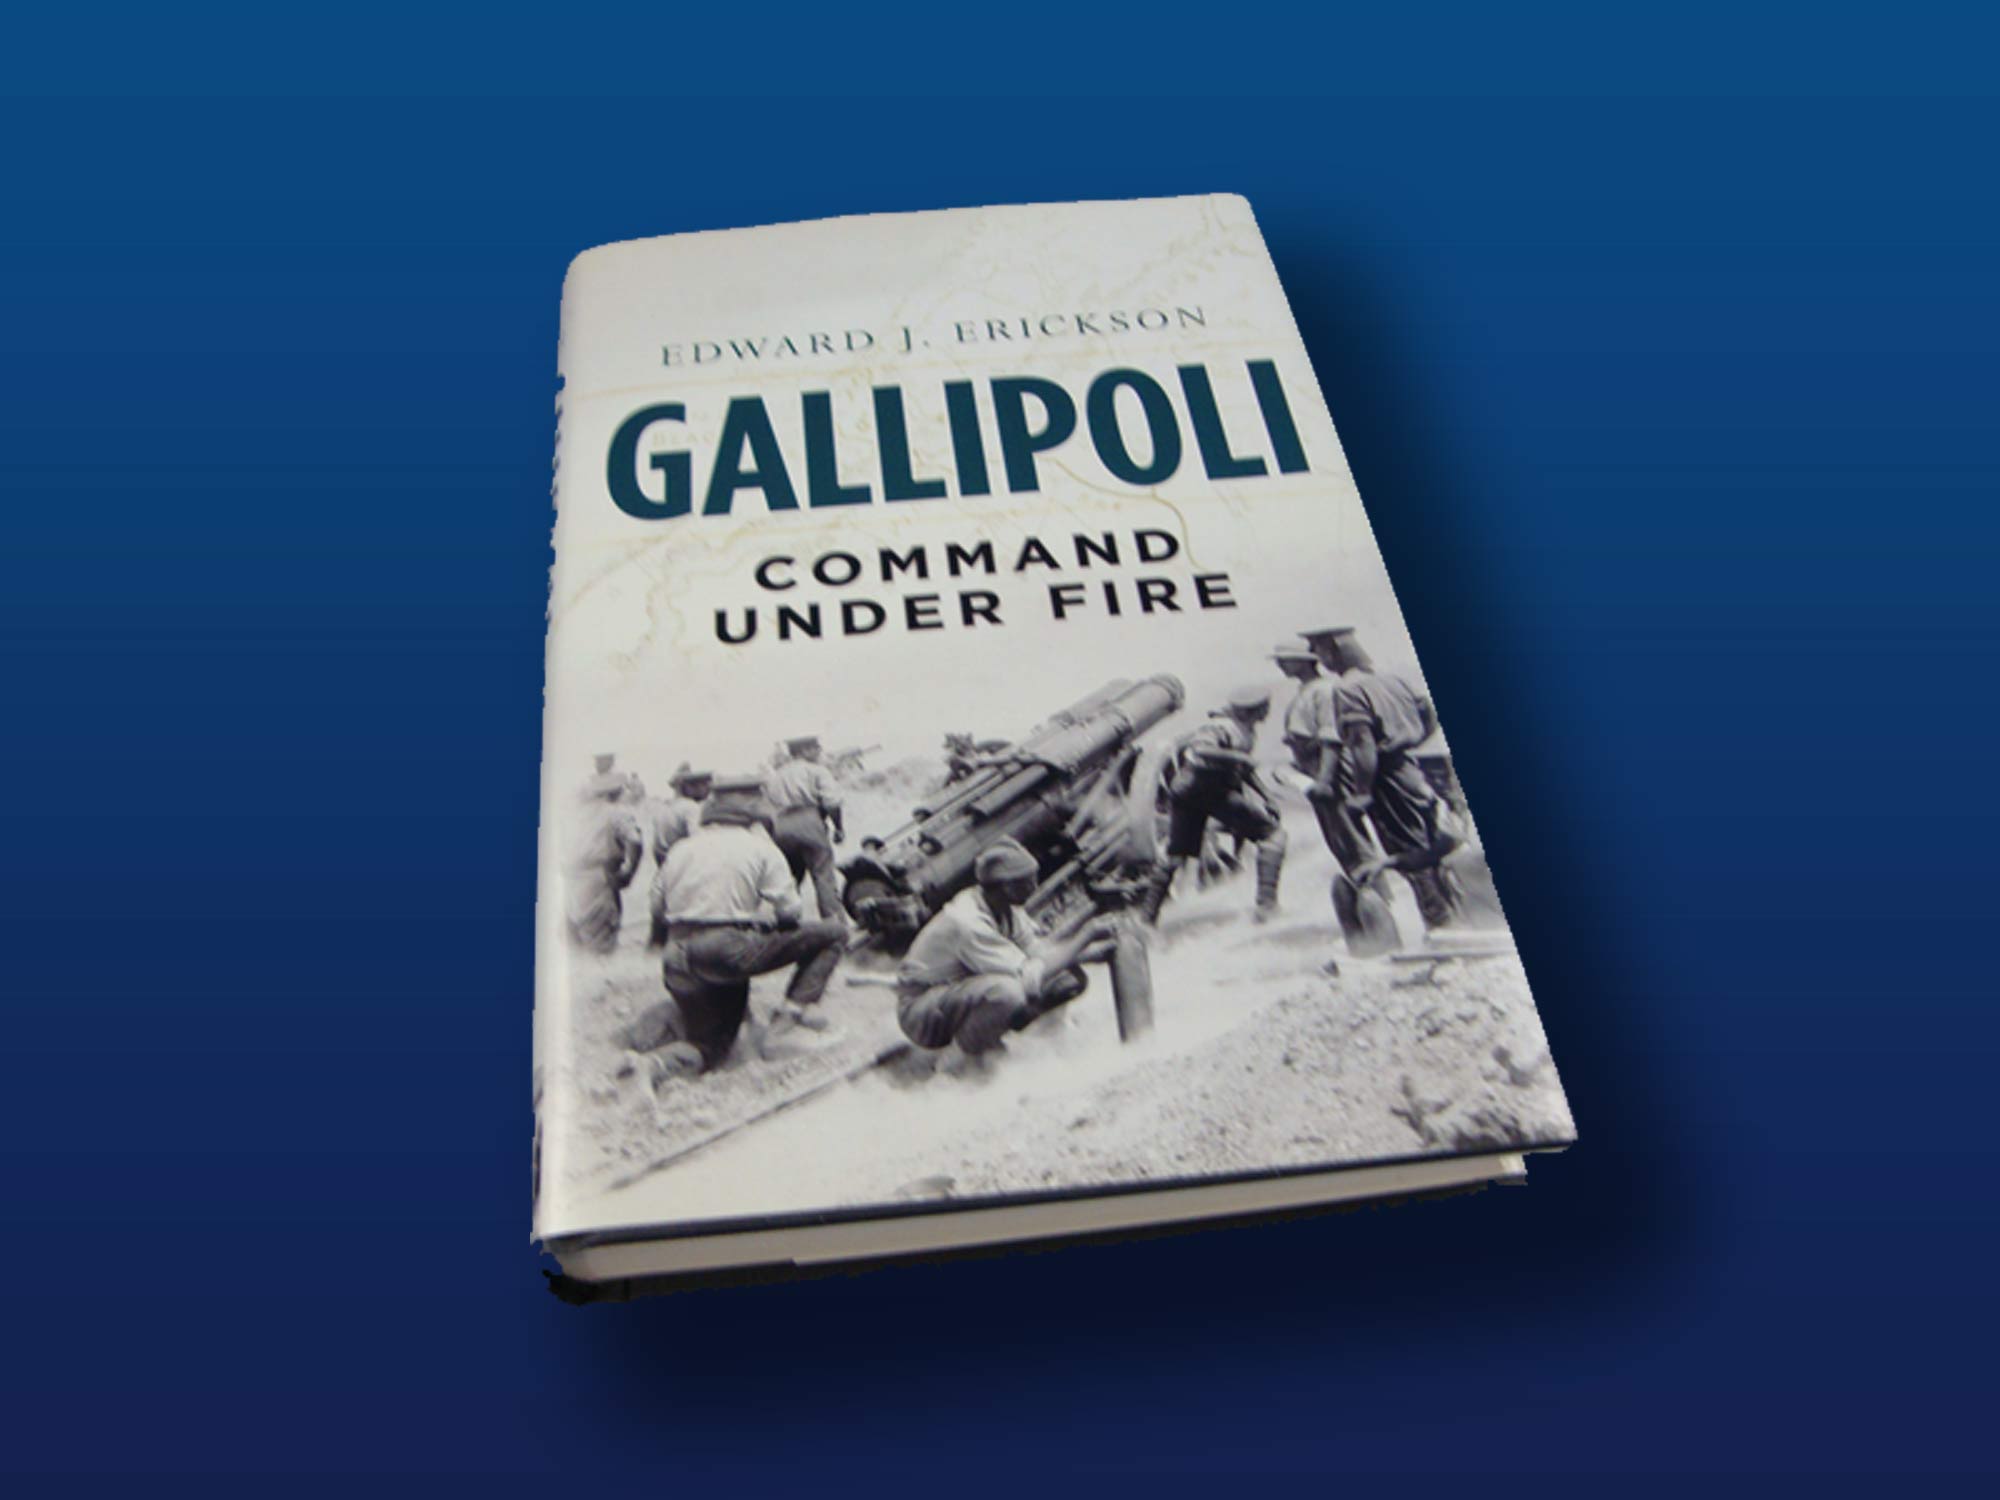 Gallipoli: Command Under Fire by Edward J. Erickson